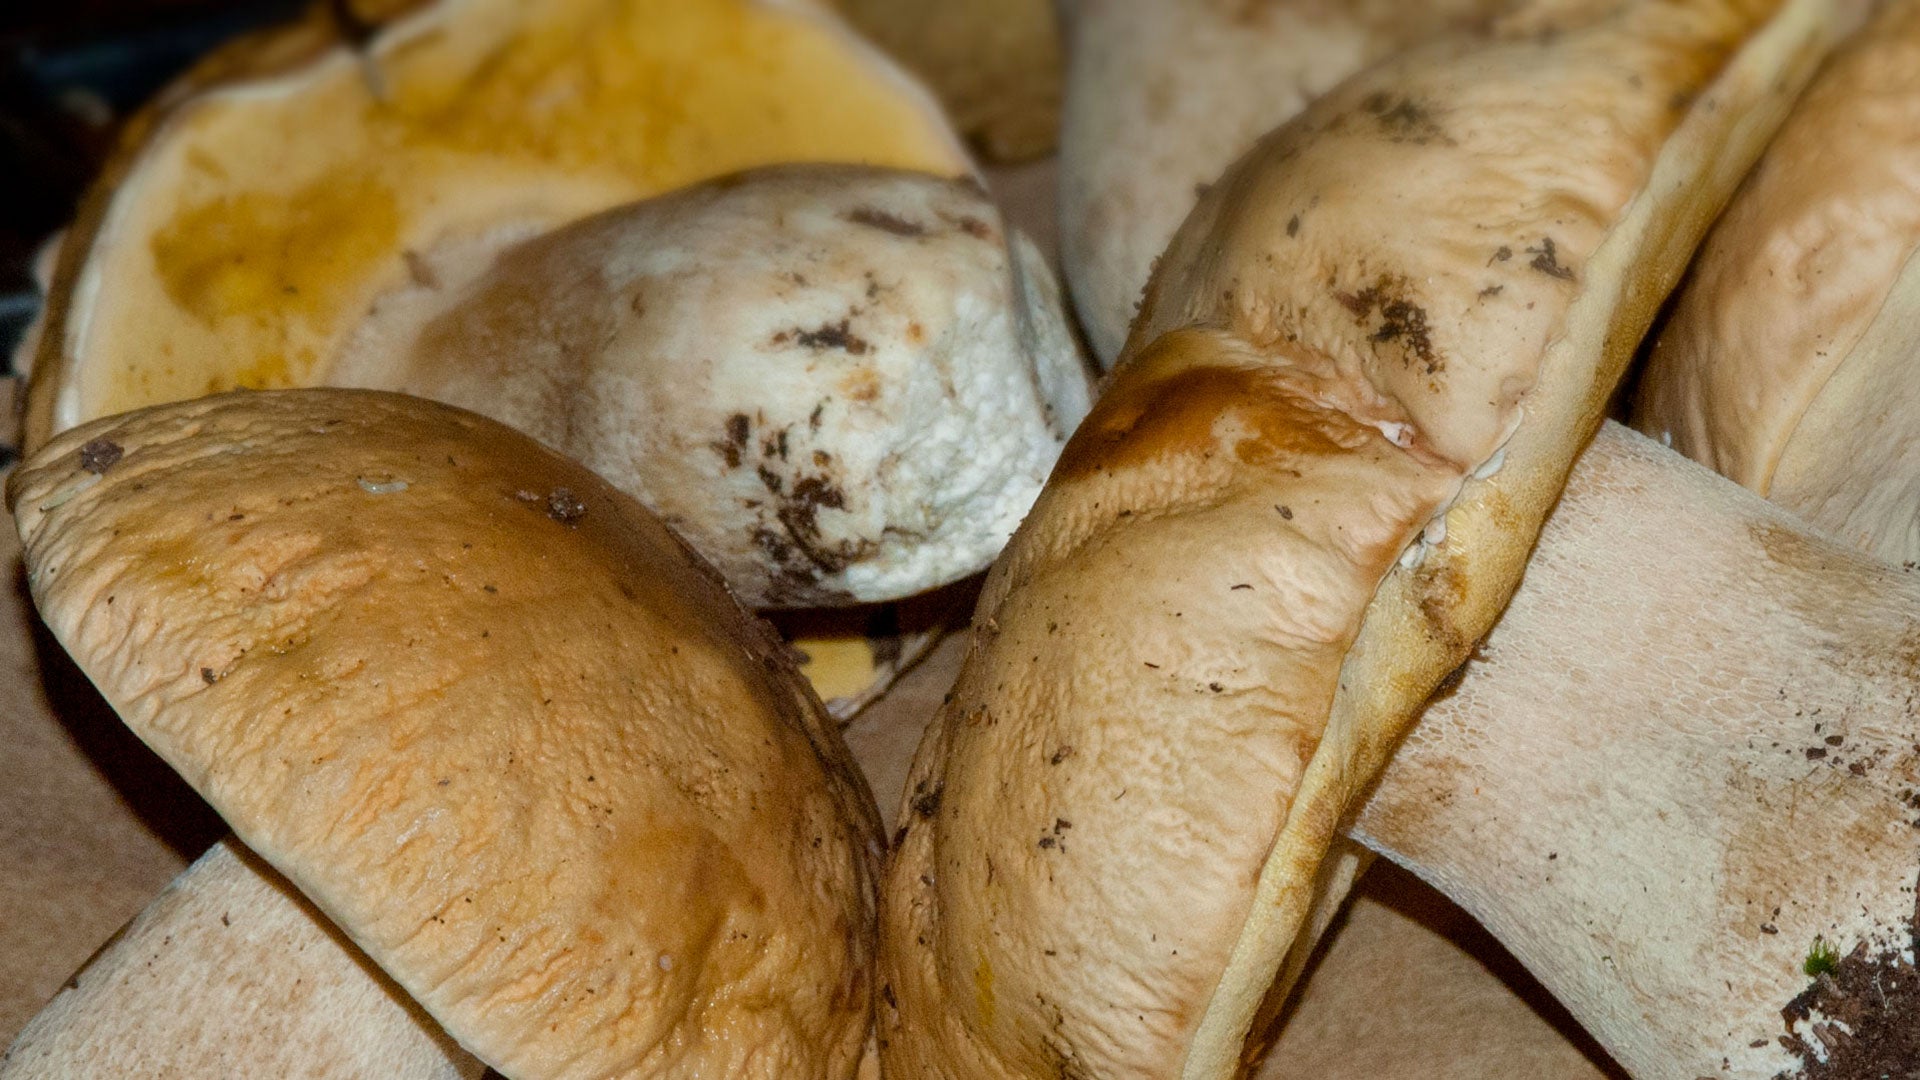 The Nutritional Properties of Mushrooms